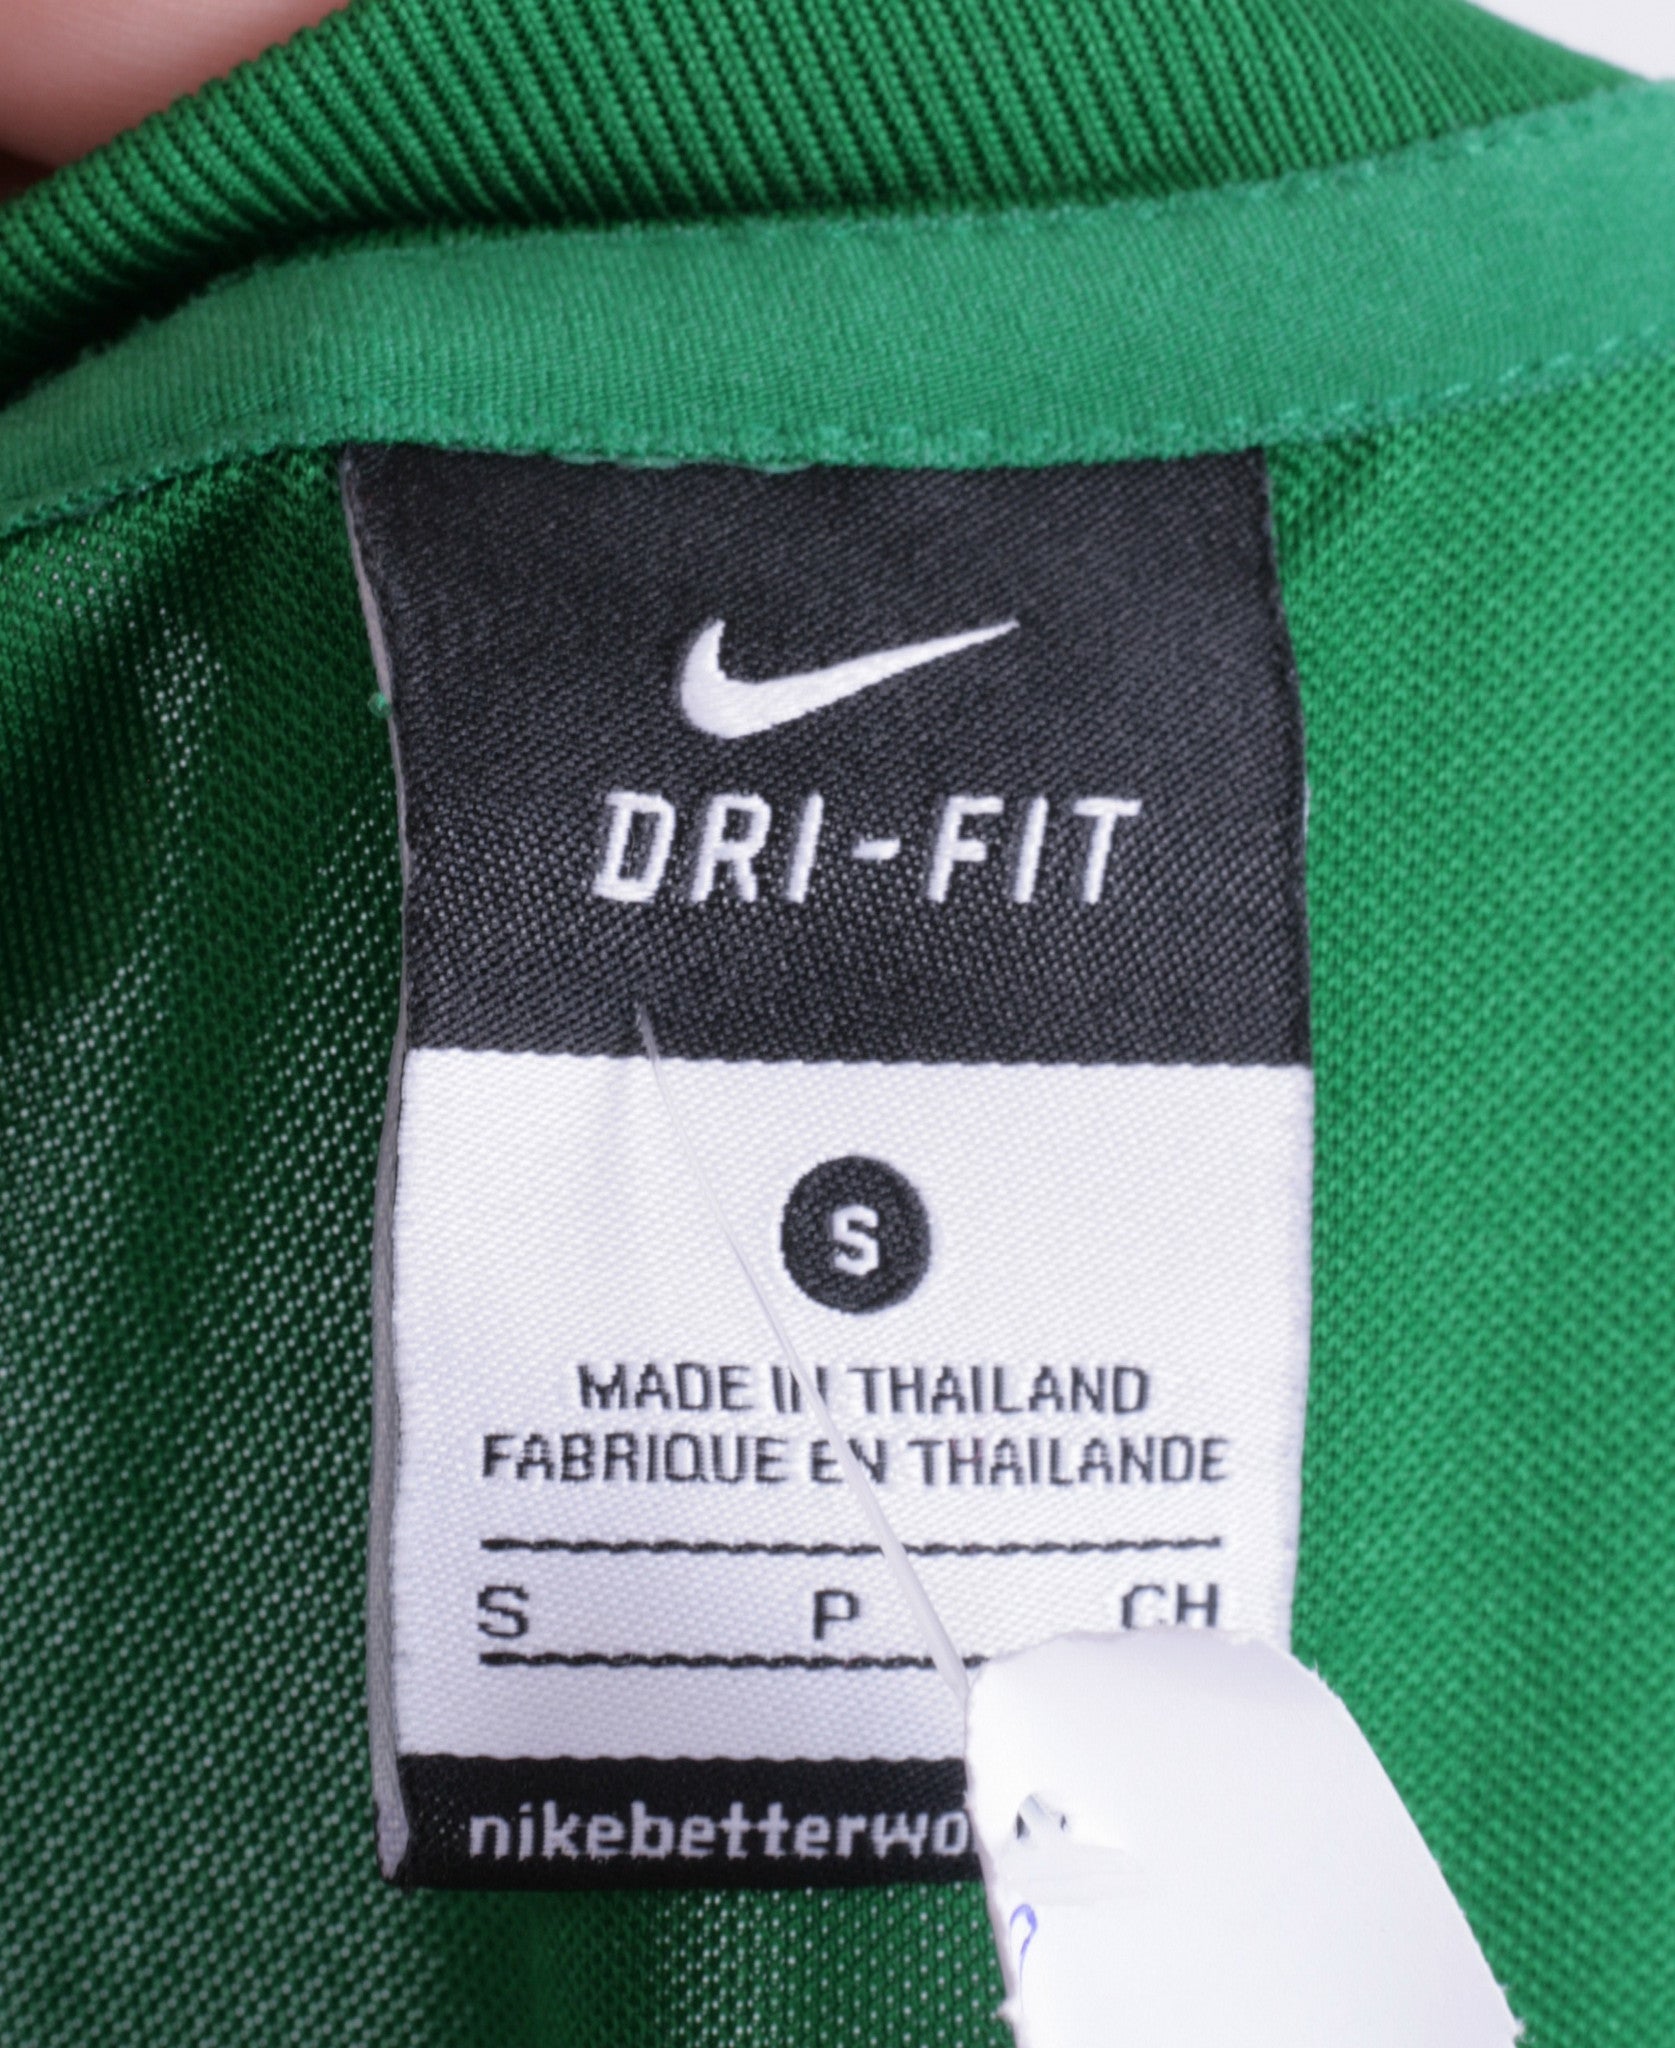 Nike Womens S Shirt Green Dri-Fit Sport Short Sleeve Football - RetrospectClothes